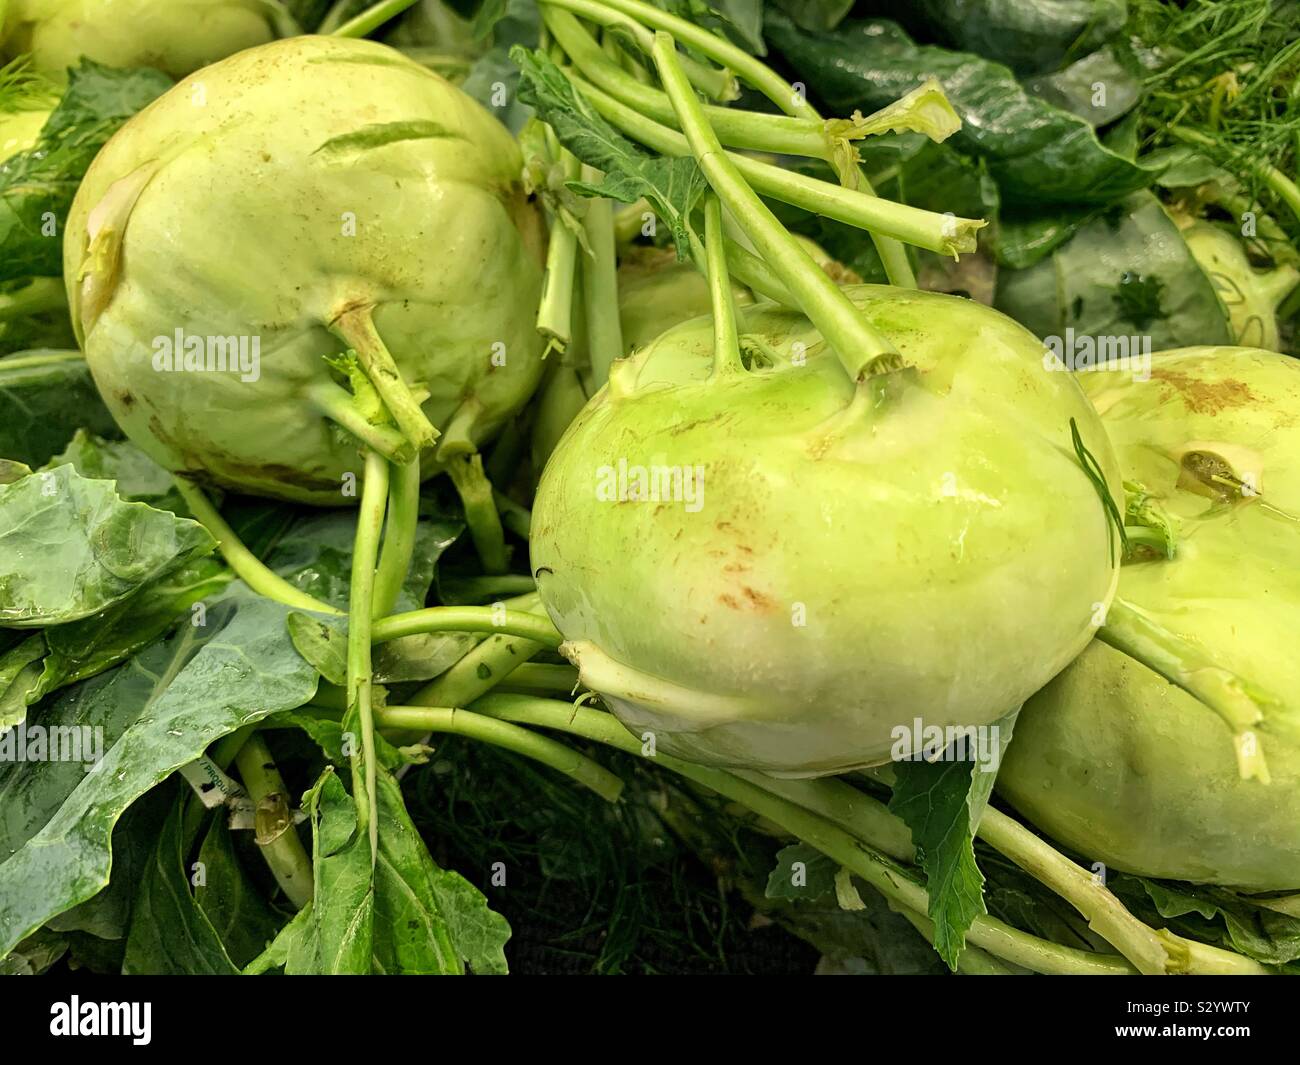 Kohlrabi, German cabbage, German turnip, cabbage turnip Stock Photo